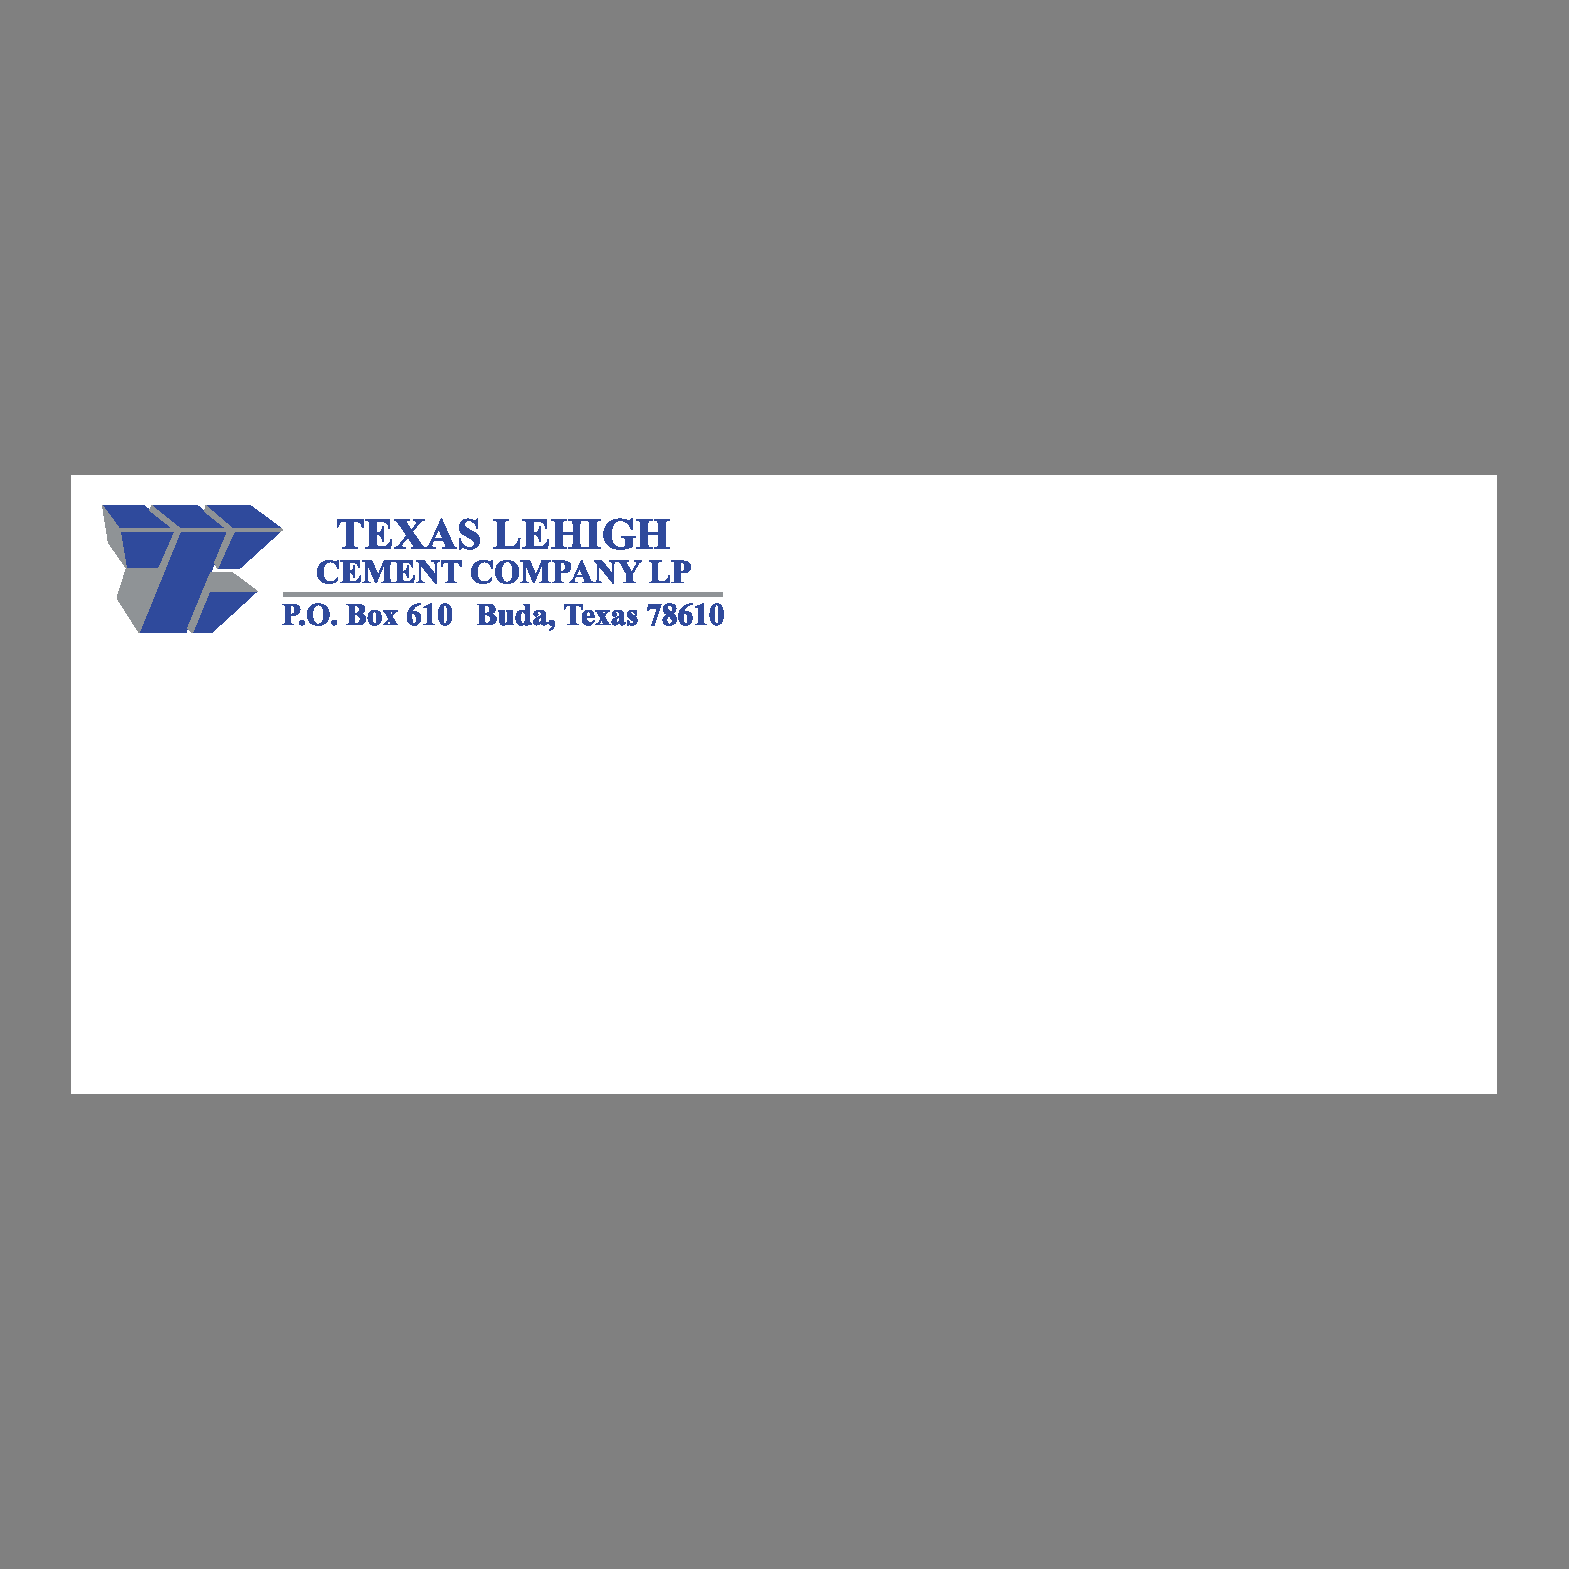 Letterhead Envelope TX Lehigh Product Image